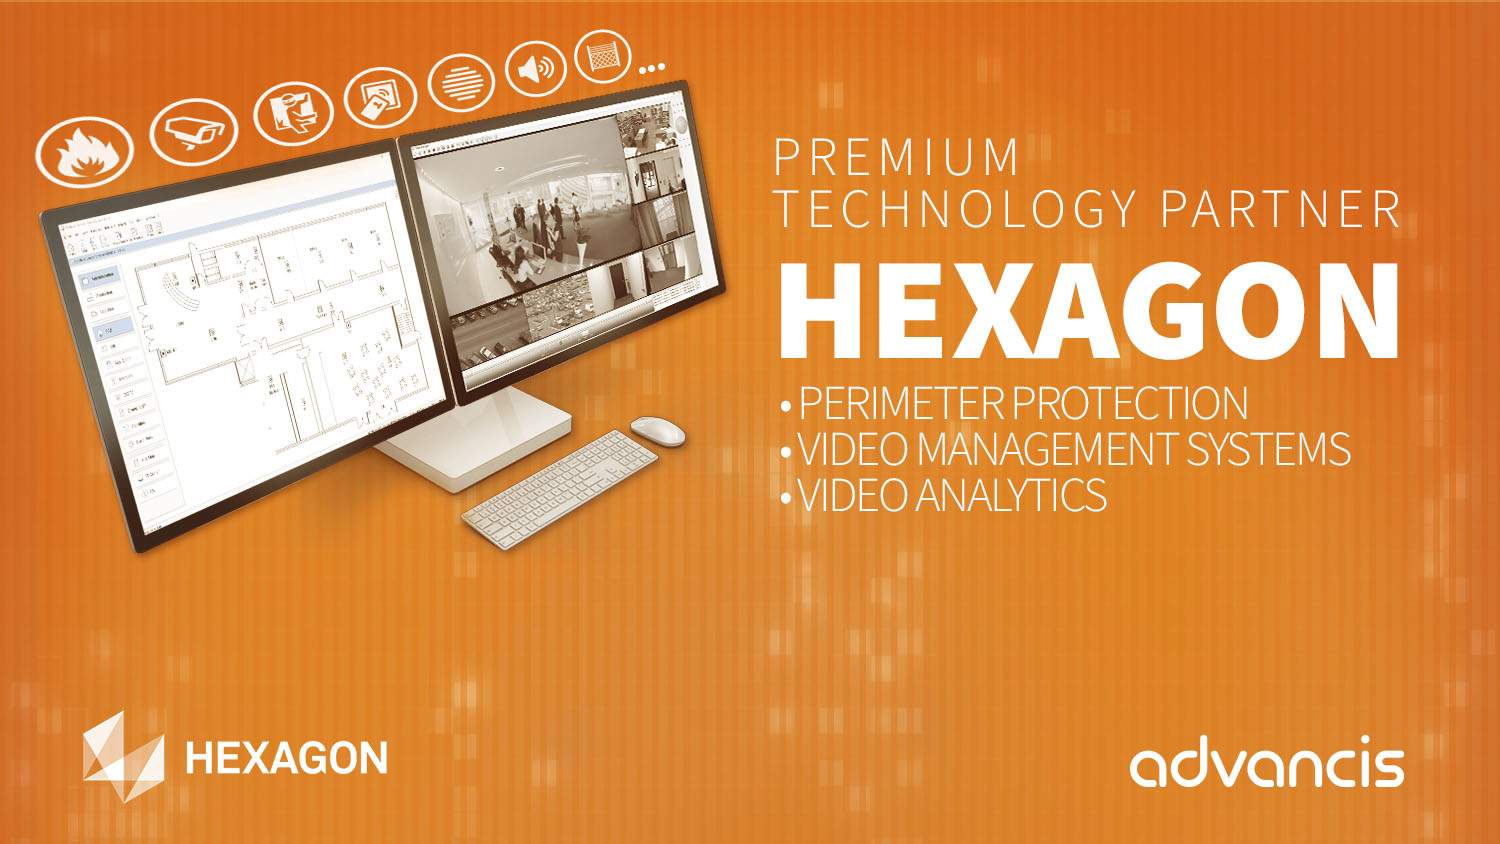  New Premium Technology Partner Hexagon